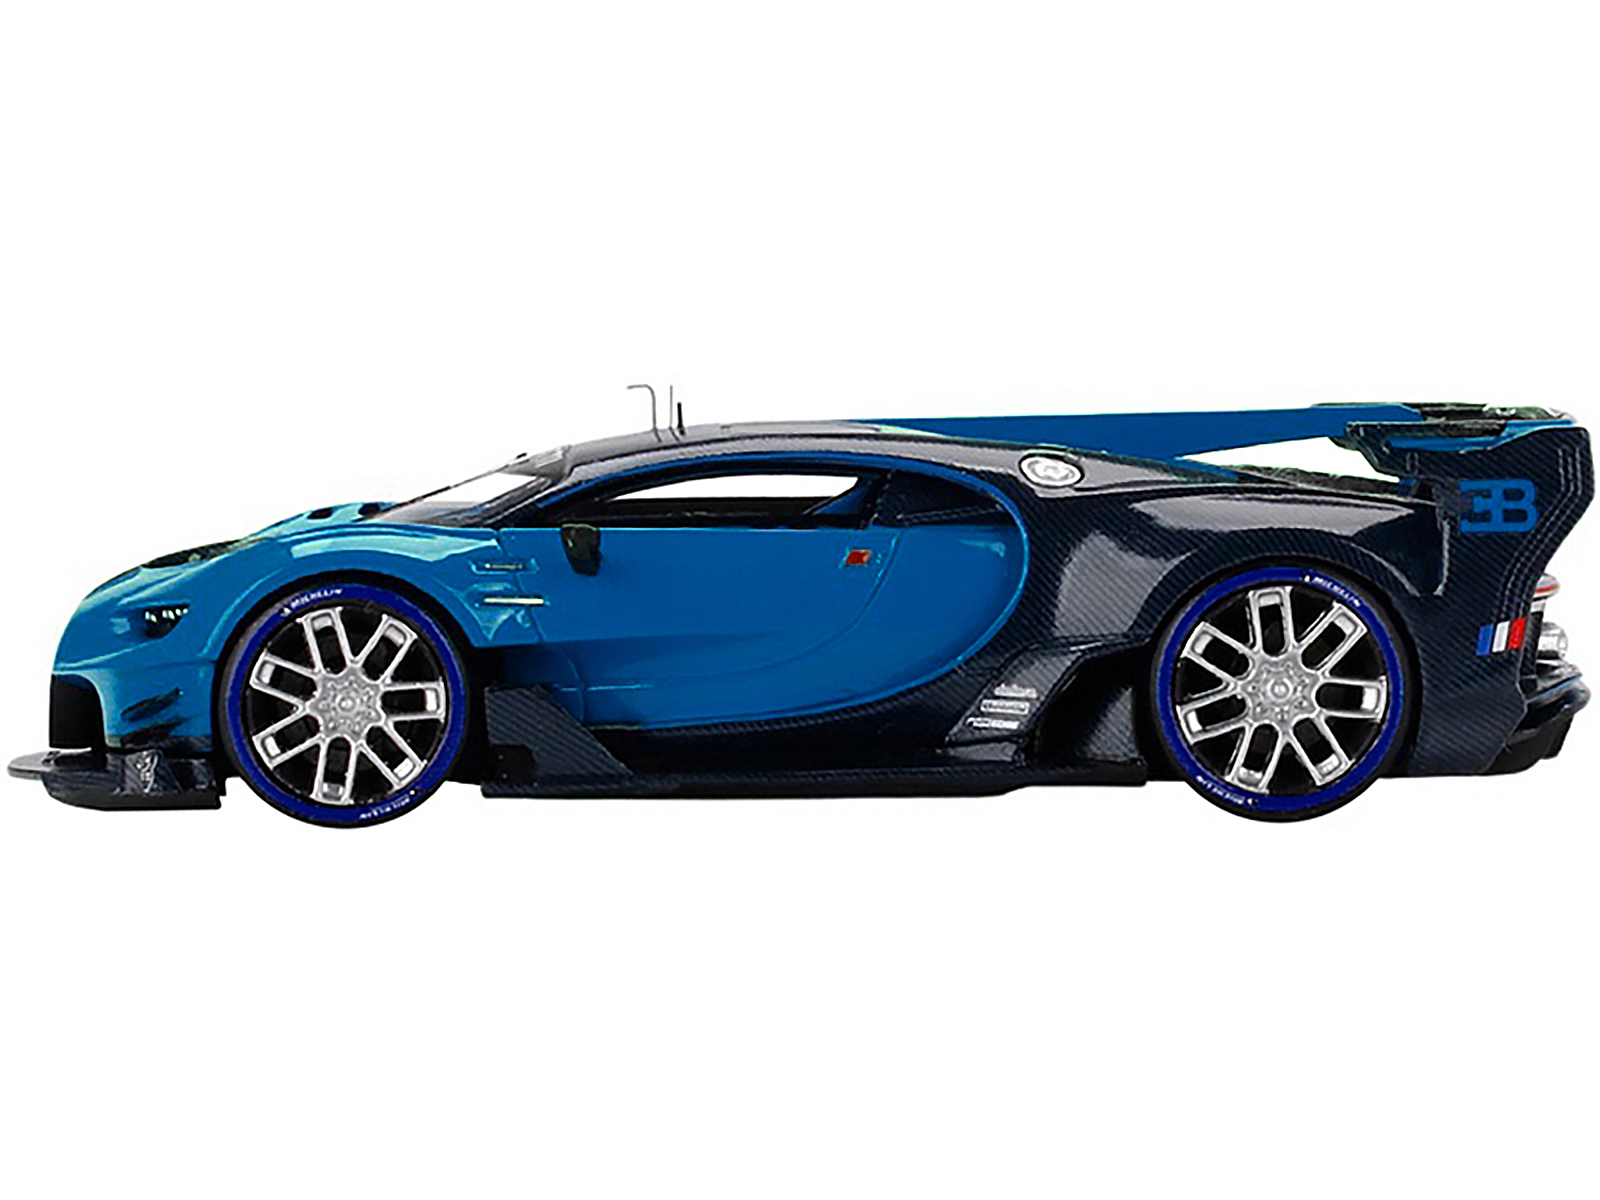 TSM-Model Bugatti Vision Gran Turismo Light Blue and Blue Carbon 1/43 Model Car by True Scale Miniatures